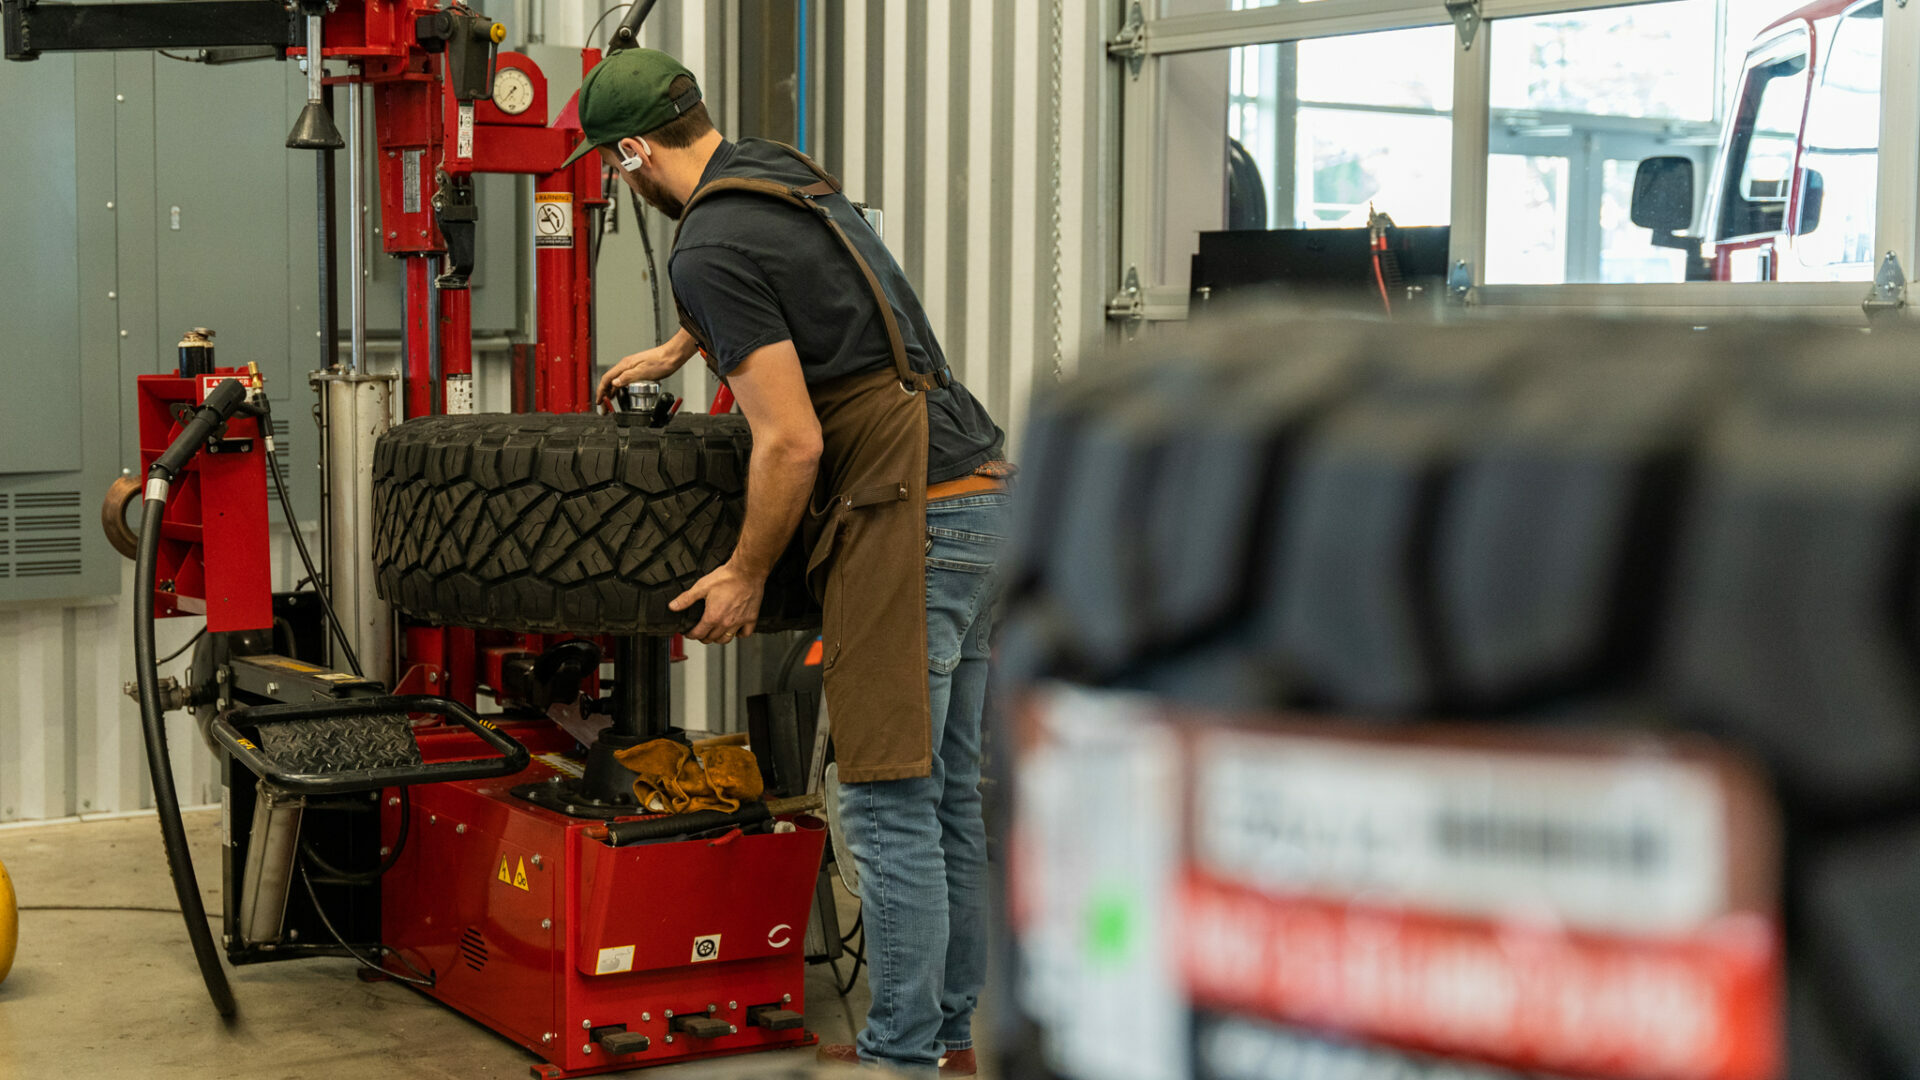 Tire mounting service using Hunter Engineering equipment